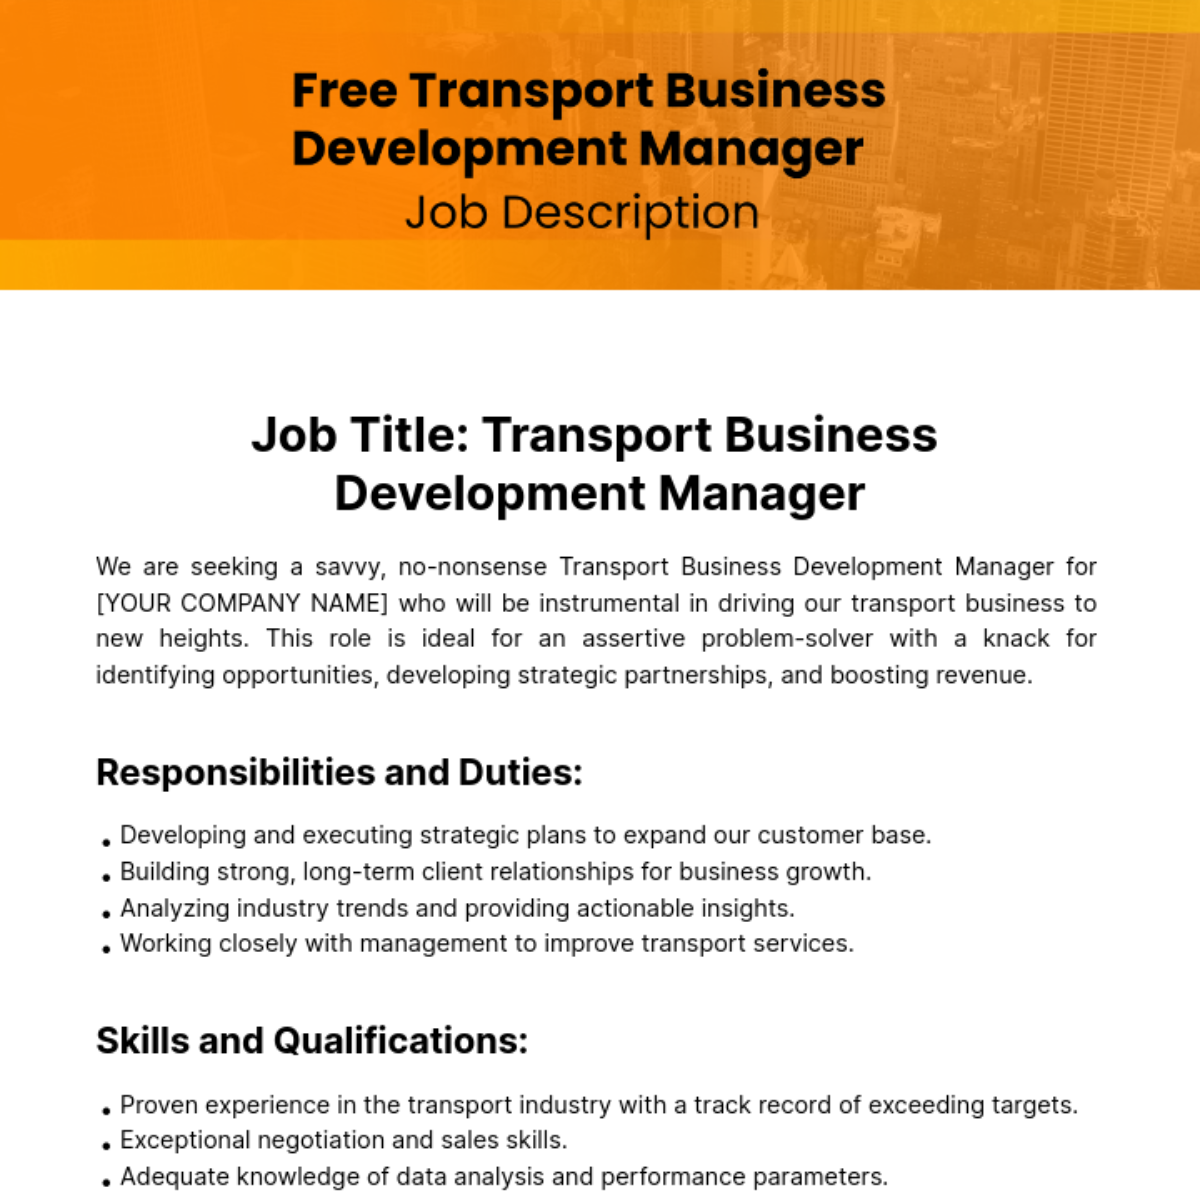 Free Transport Business Development Manager Job Description Template